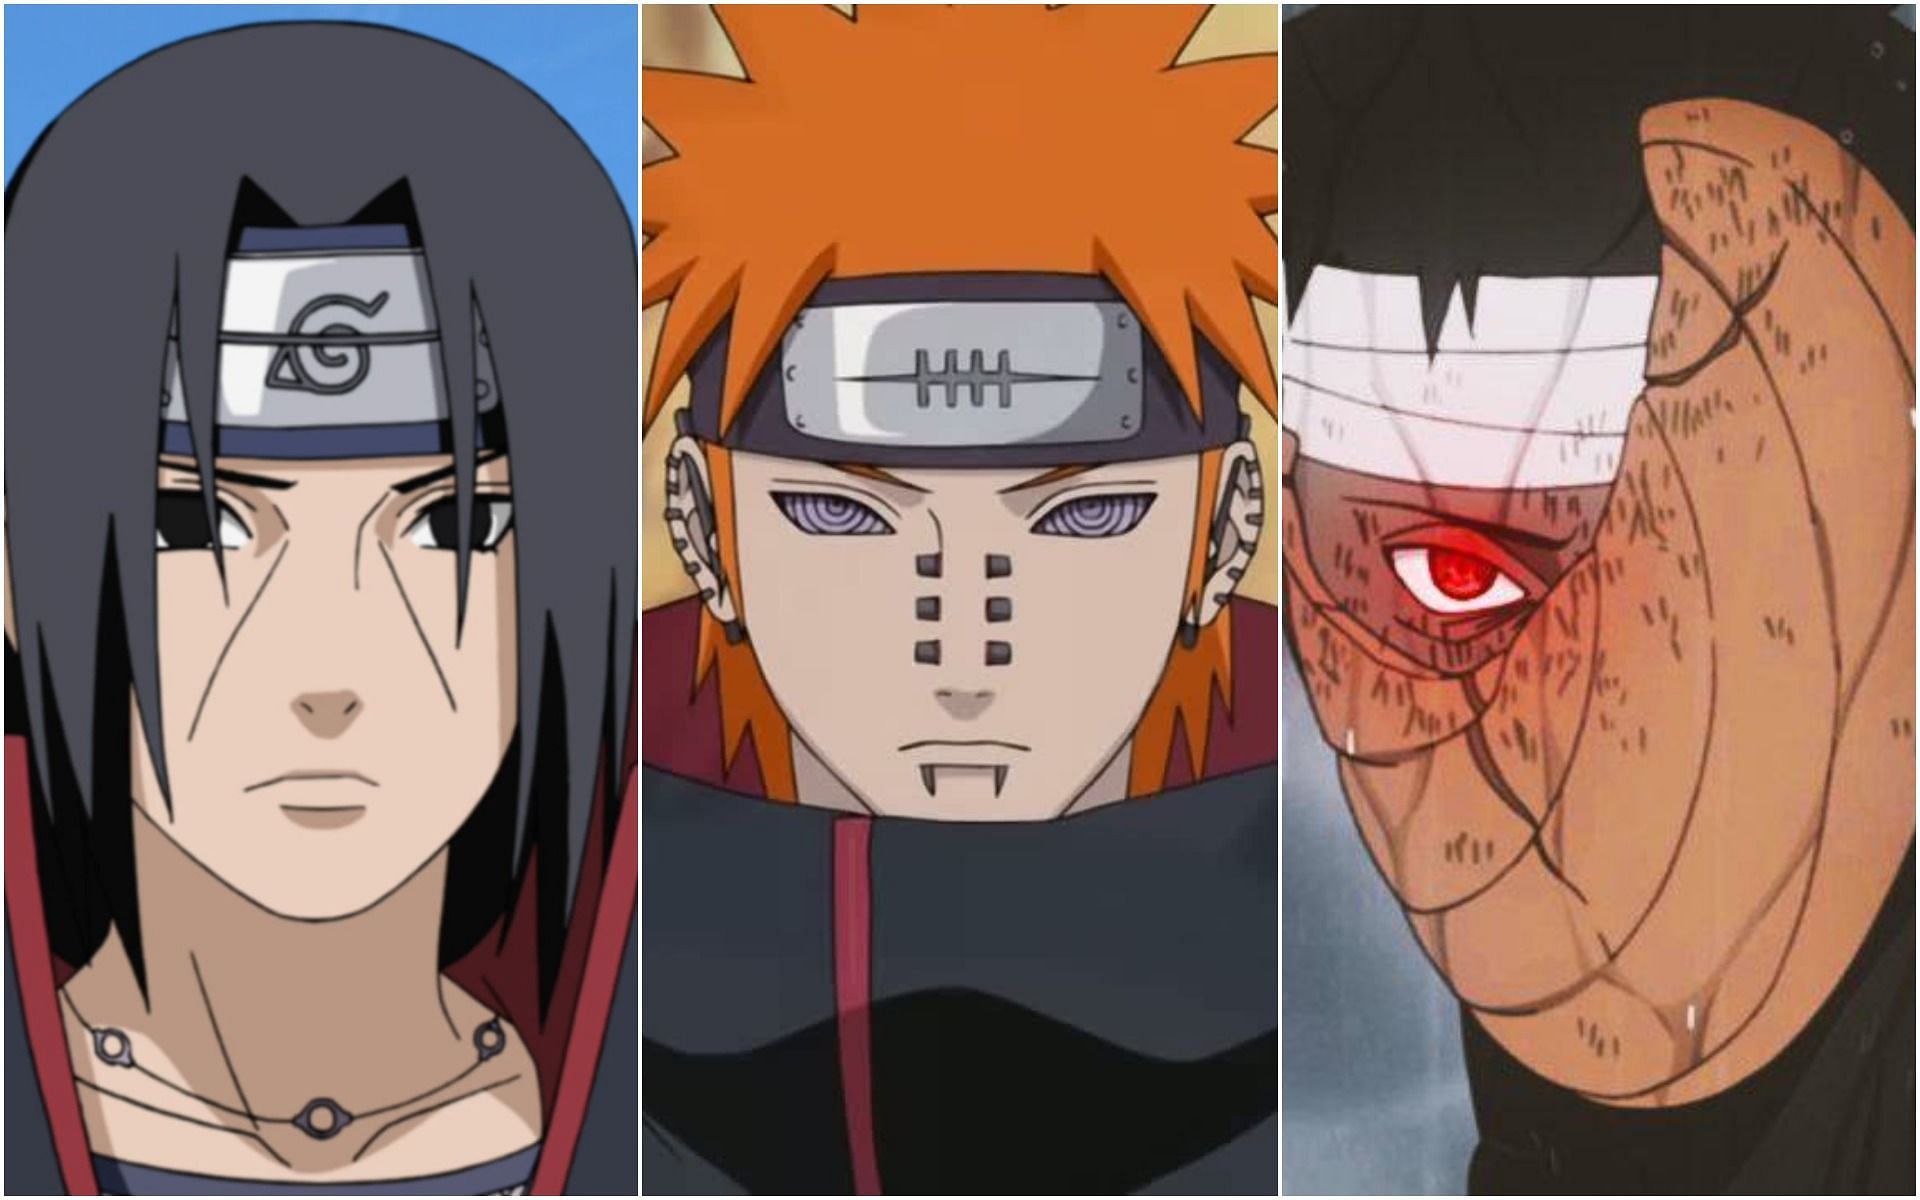 10 Akatsuki members in Naruto, ranked based on strength